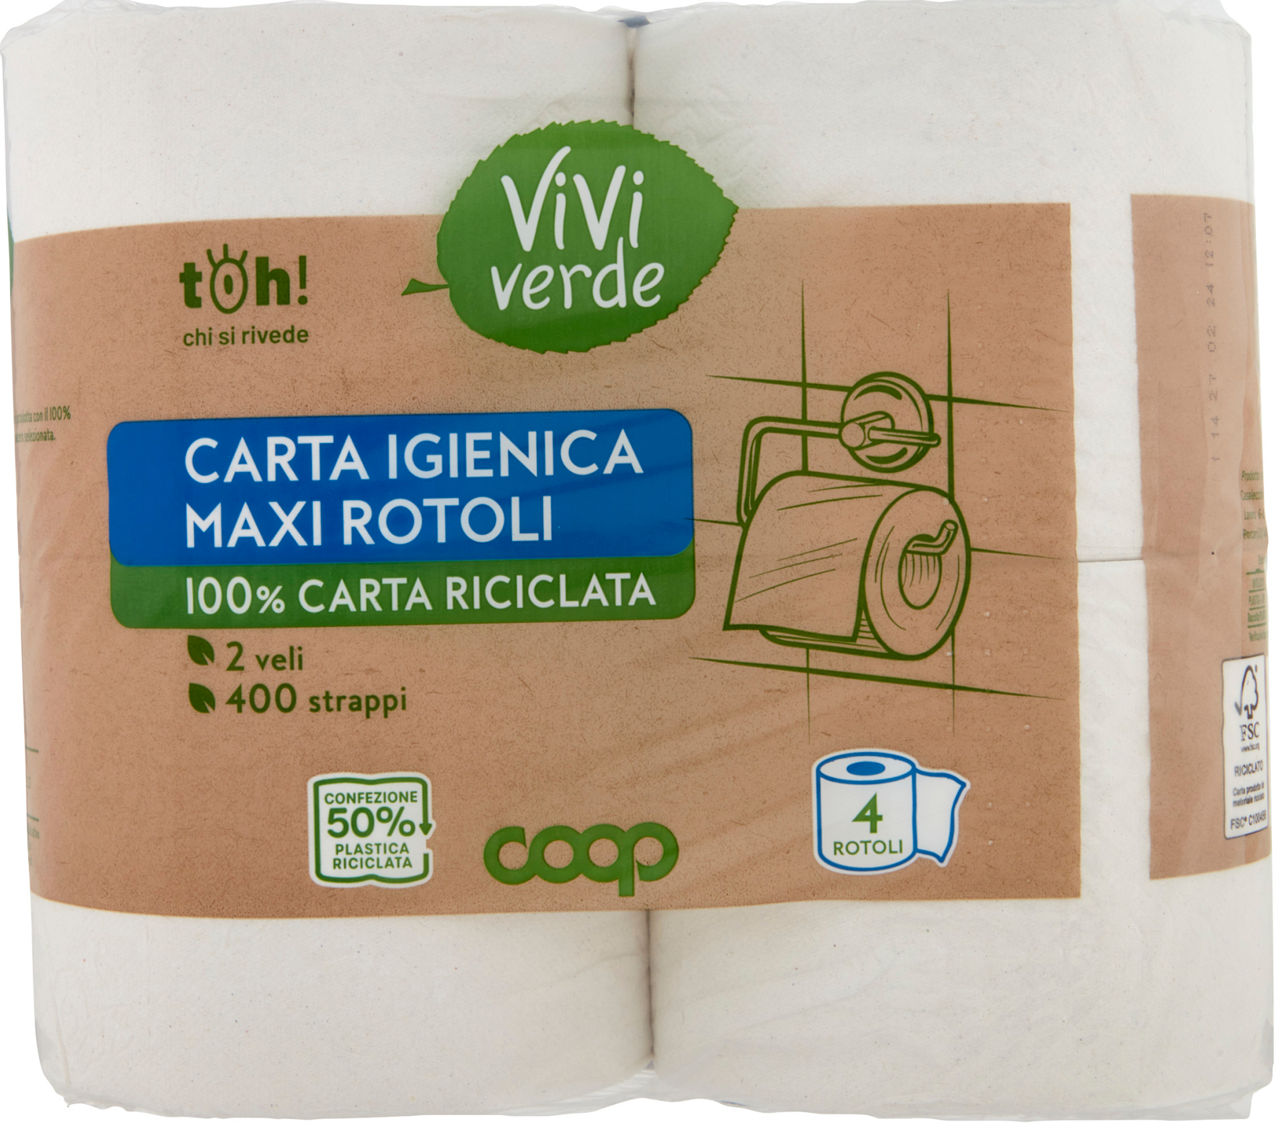 carta igienica Maxi Rotoli Vivi Verde 4 pz - 2